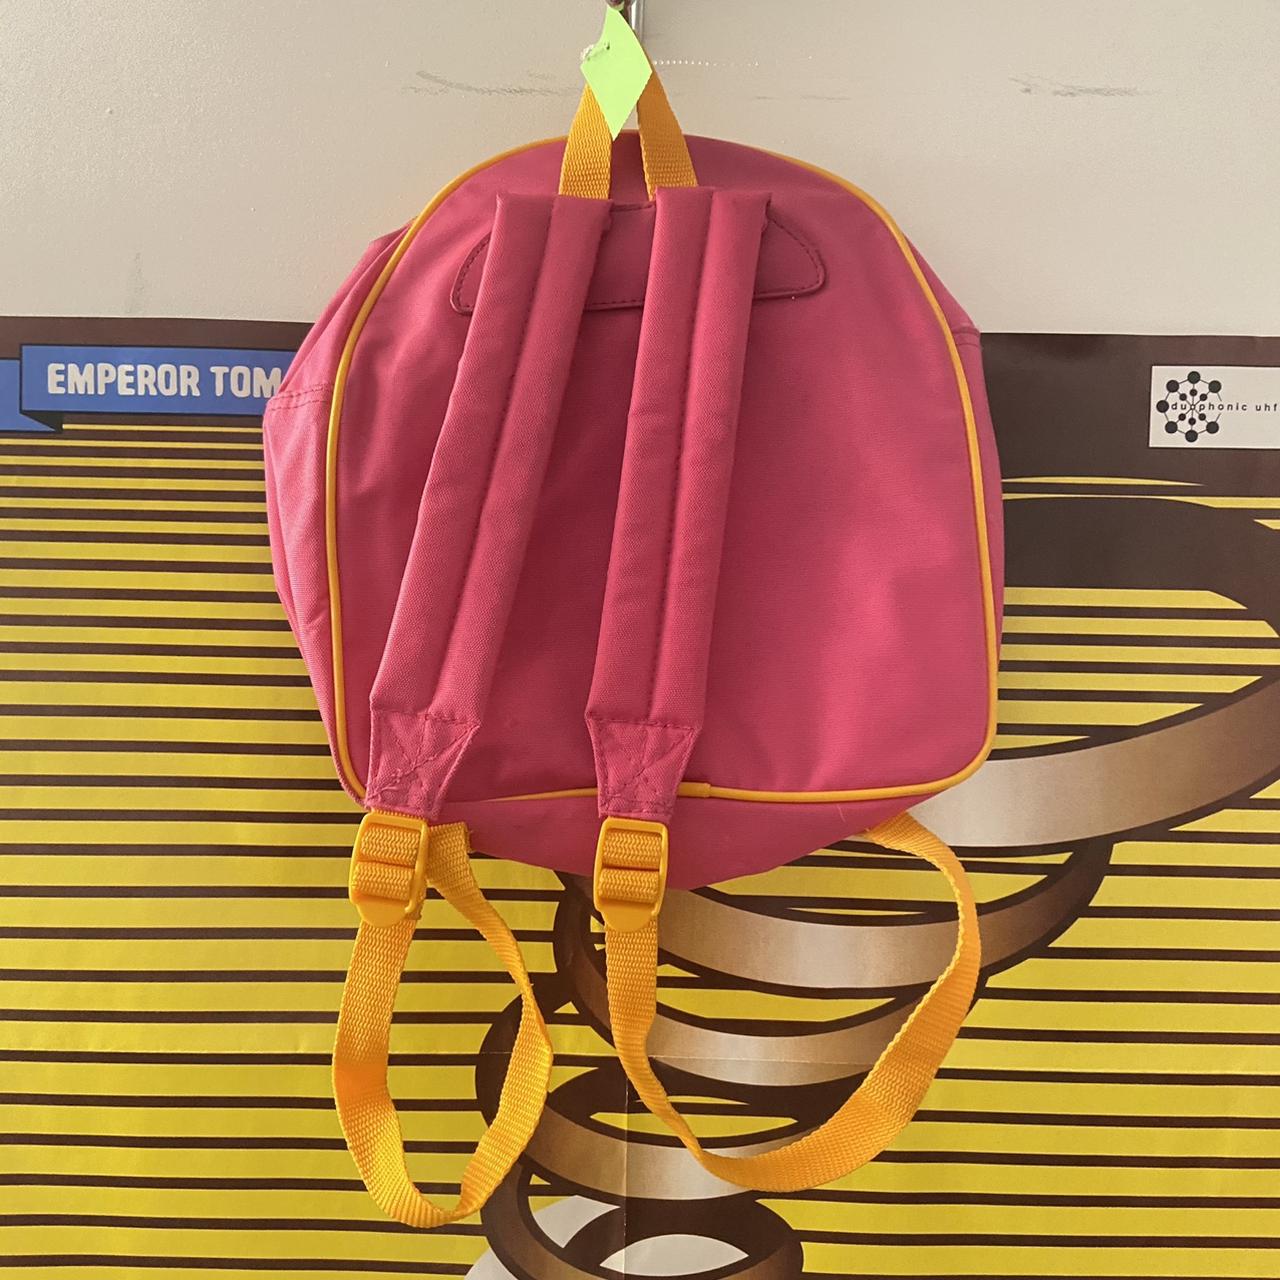 Super cute Pink mini backpack, has a colorful heart - Depop